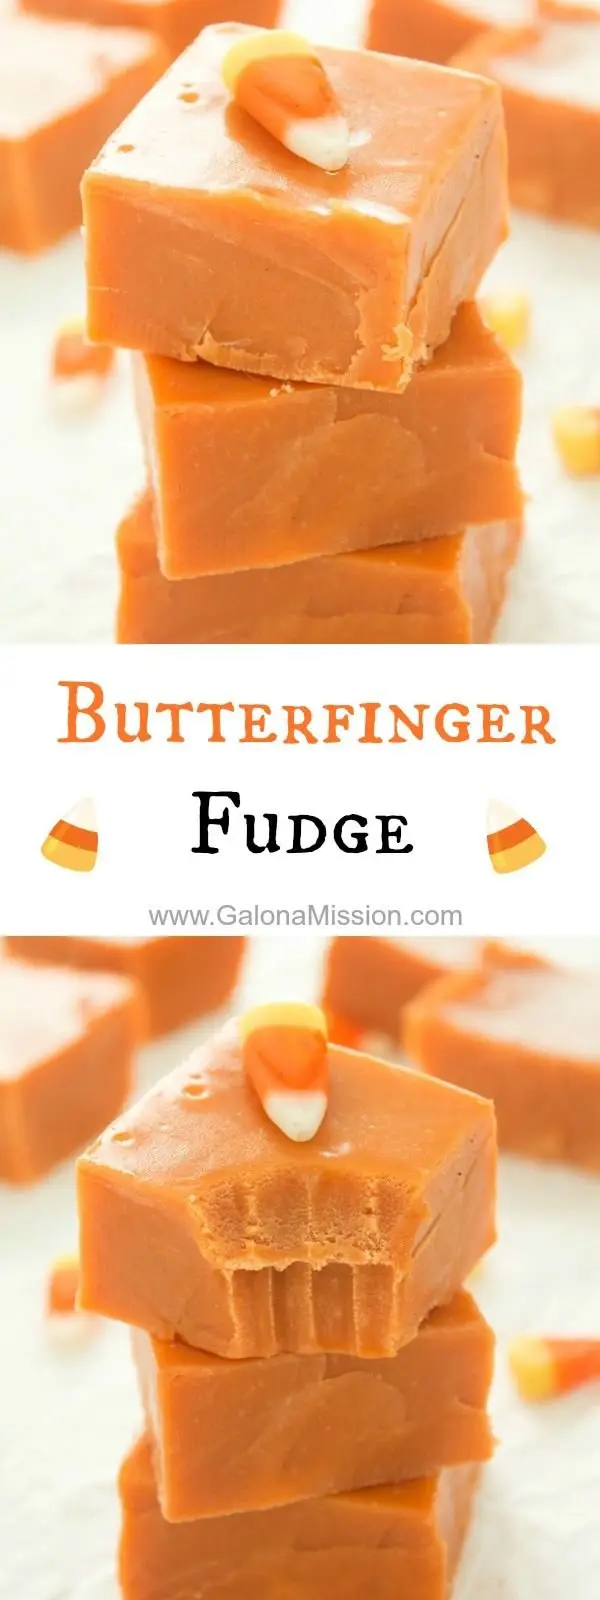 Butterfinger Fudge